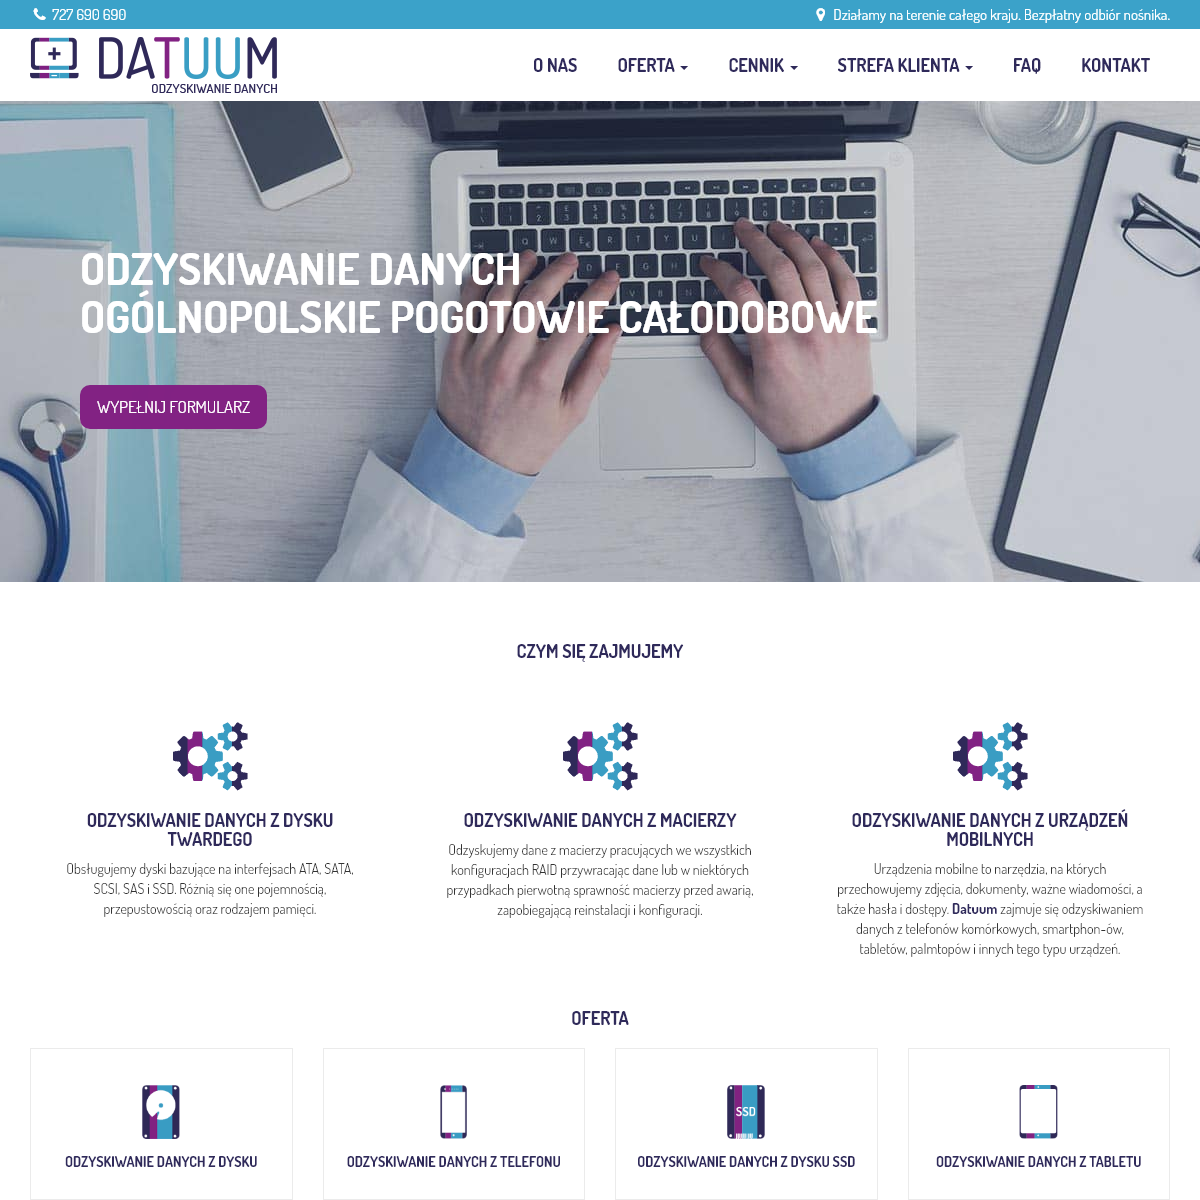 A complete backup of datuum.pl